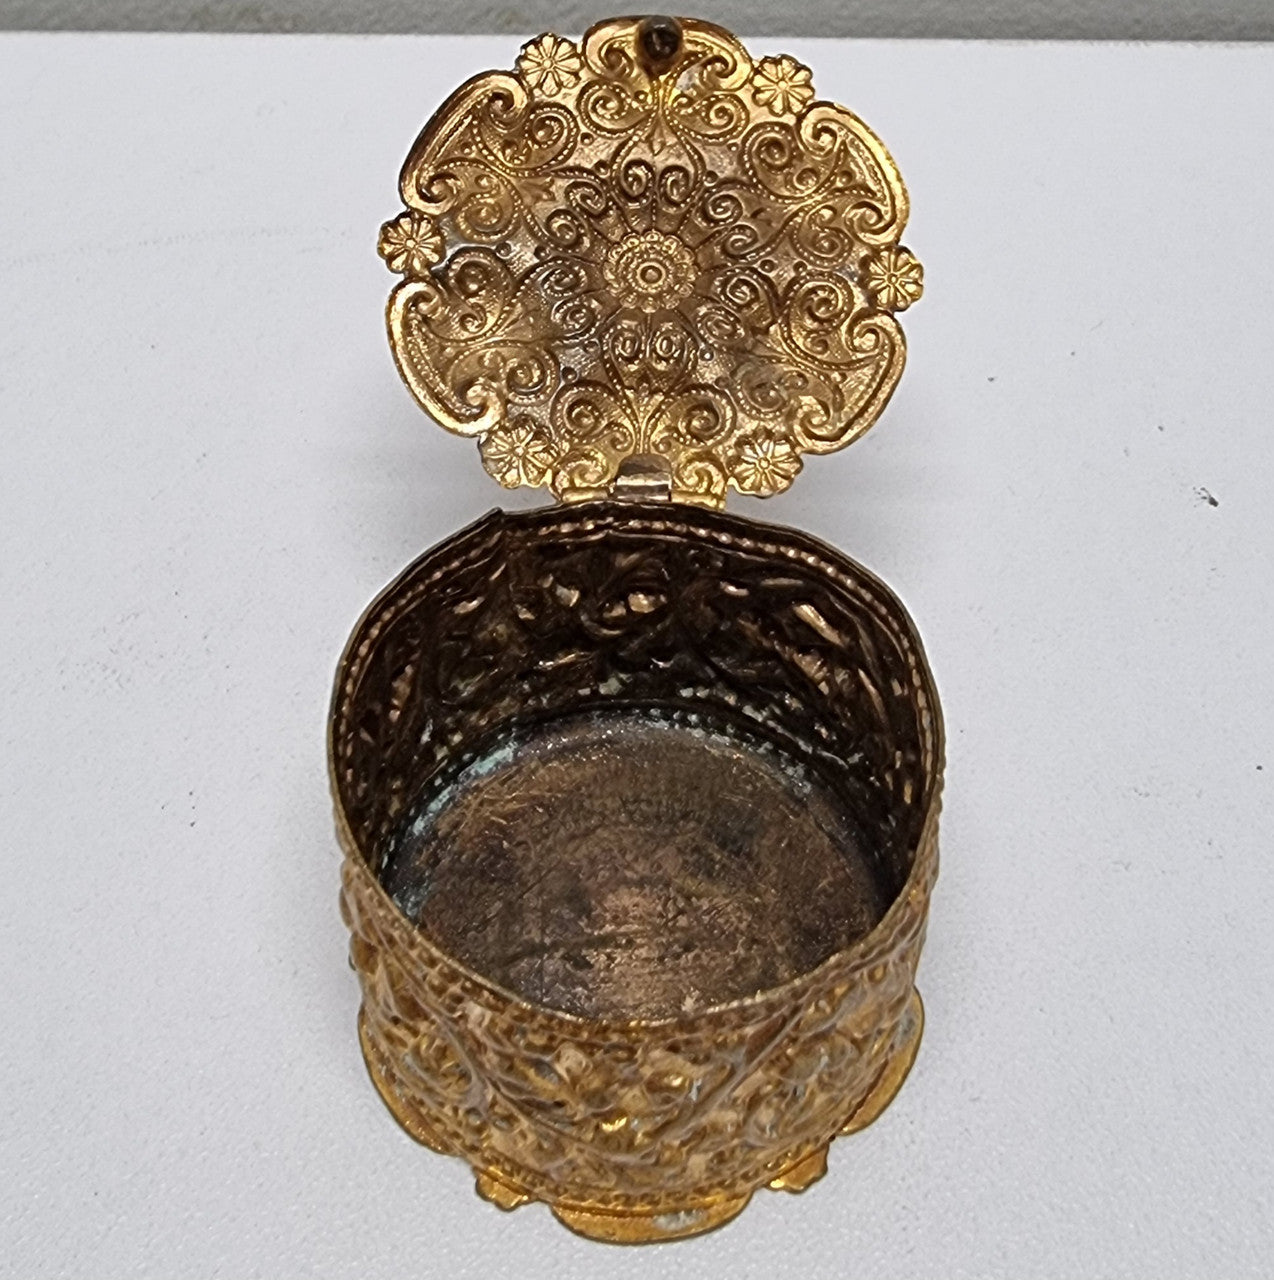 Antique French Gilt Metal Ornate Trinket Box